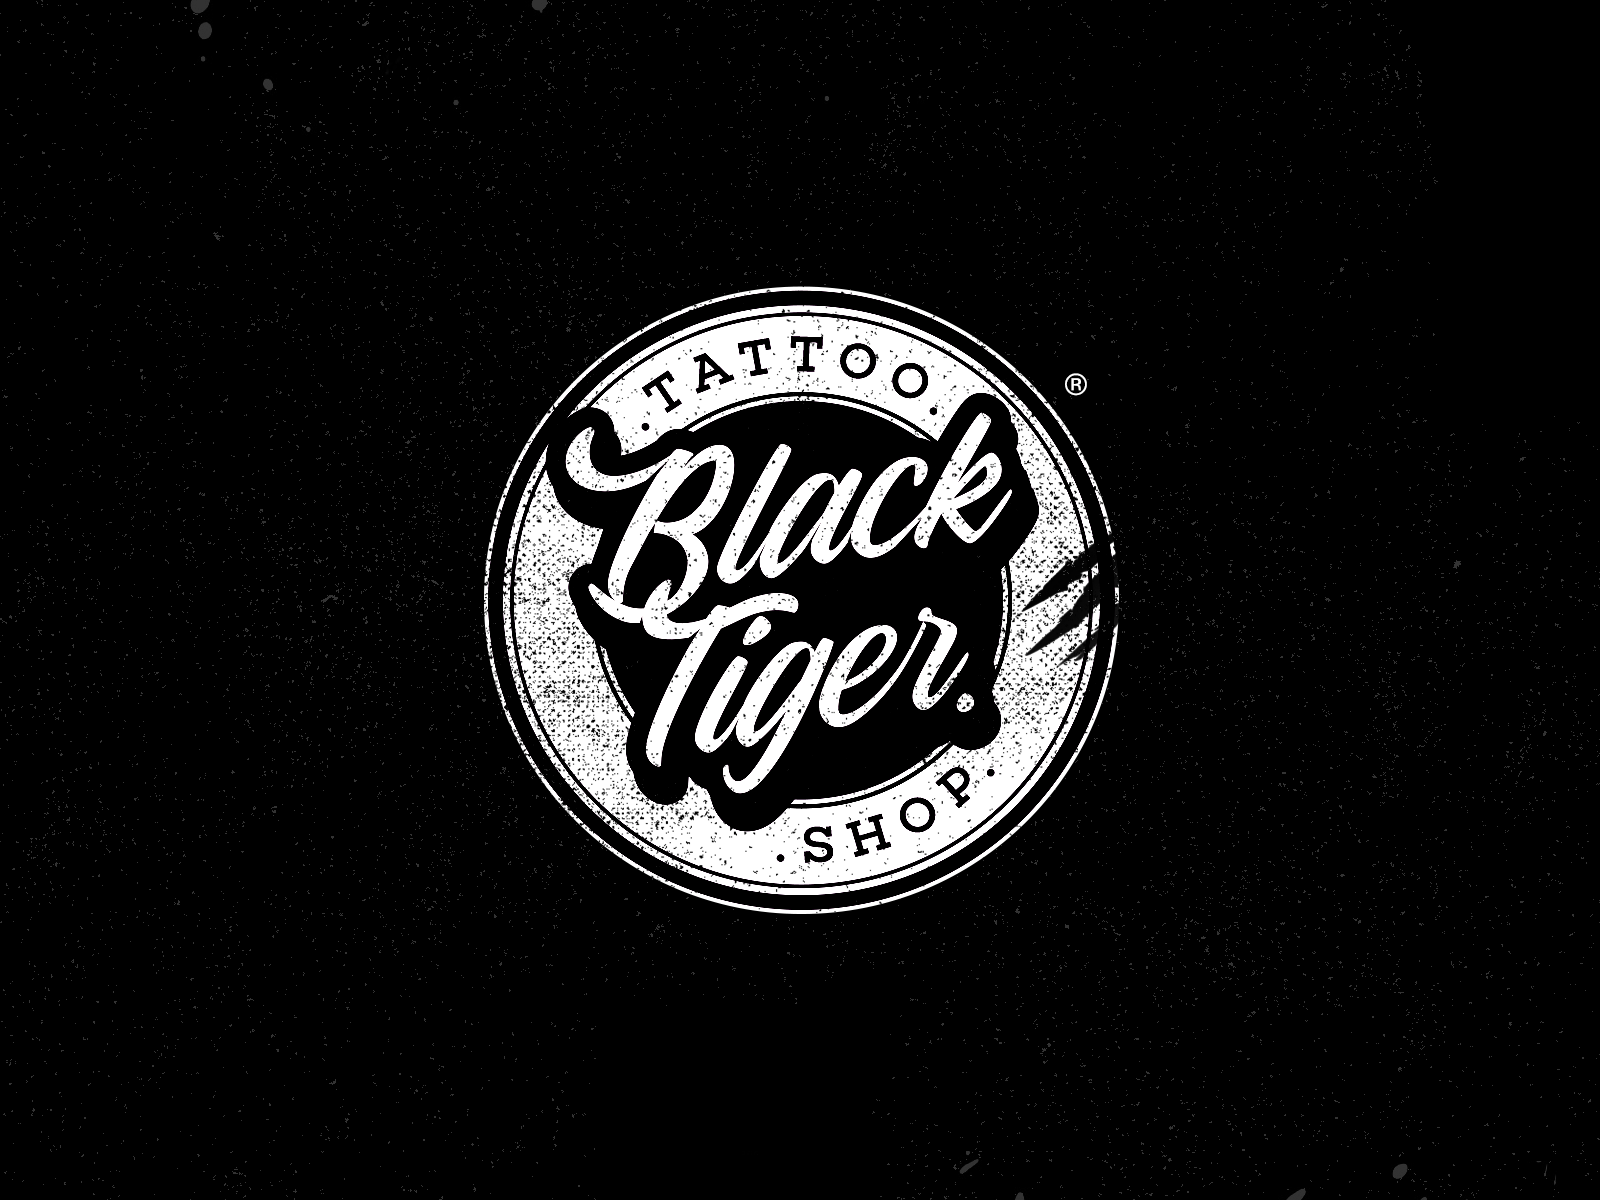 Black Tiger - Tattoo Shop by Mauro Faustino on Dribbble